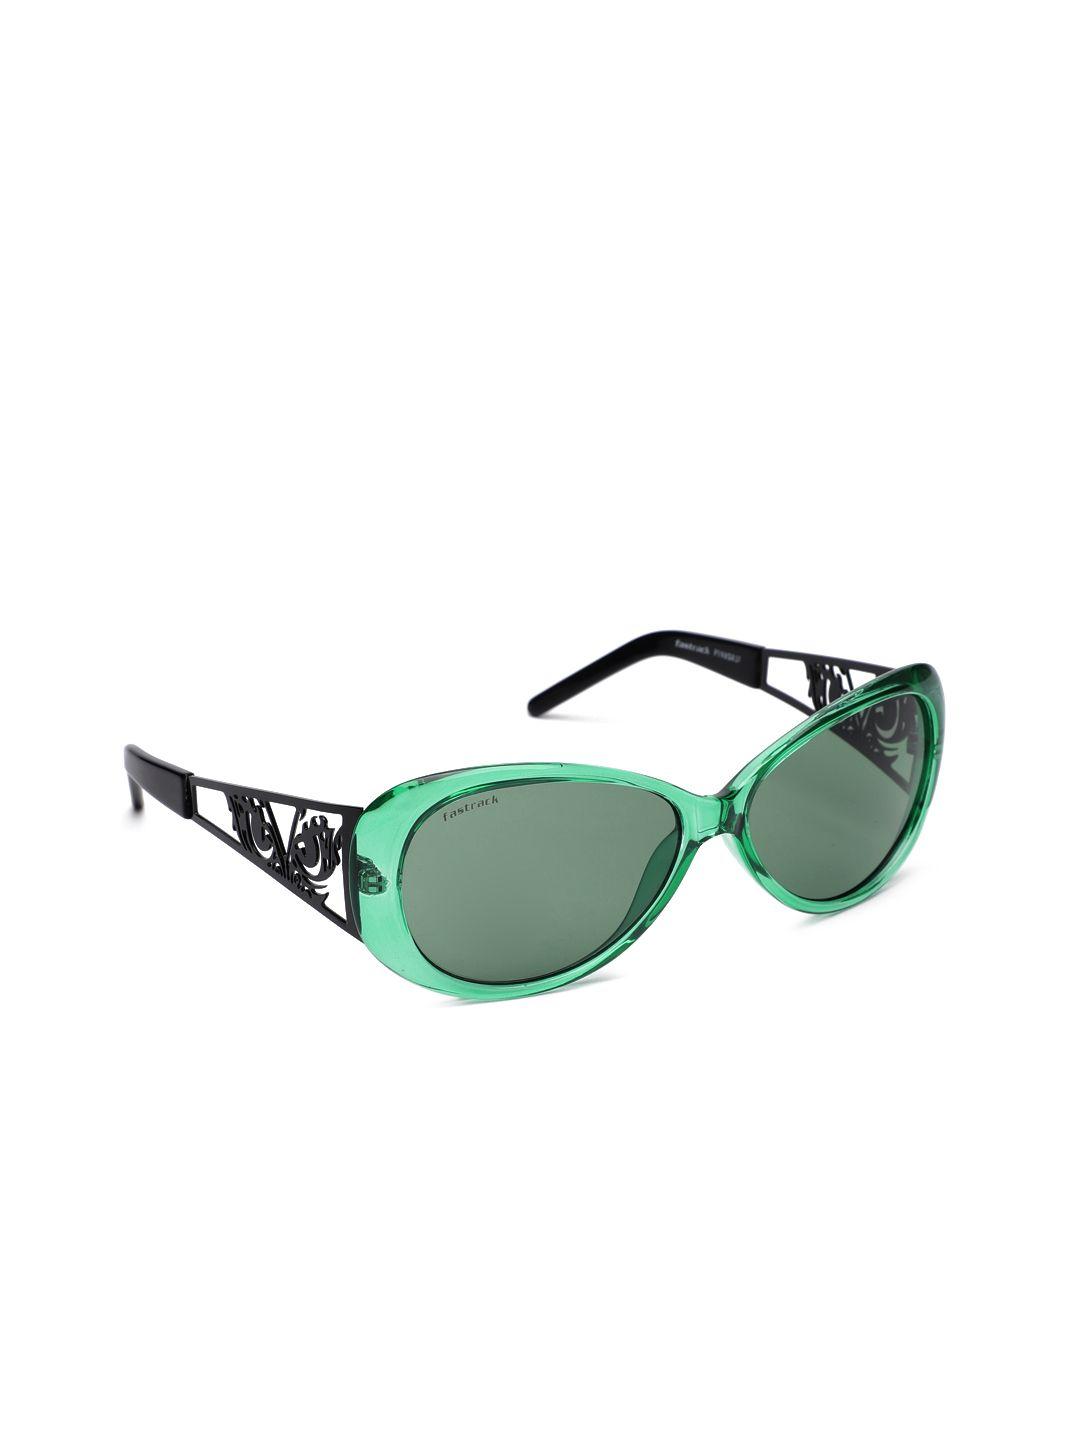 fastrack-women-oval-sunglasses-p198gr3f